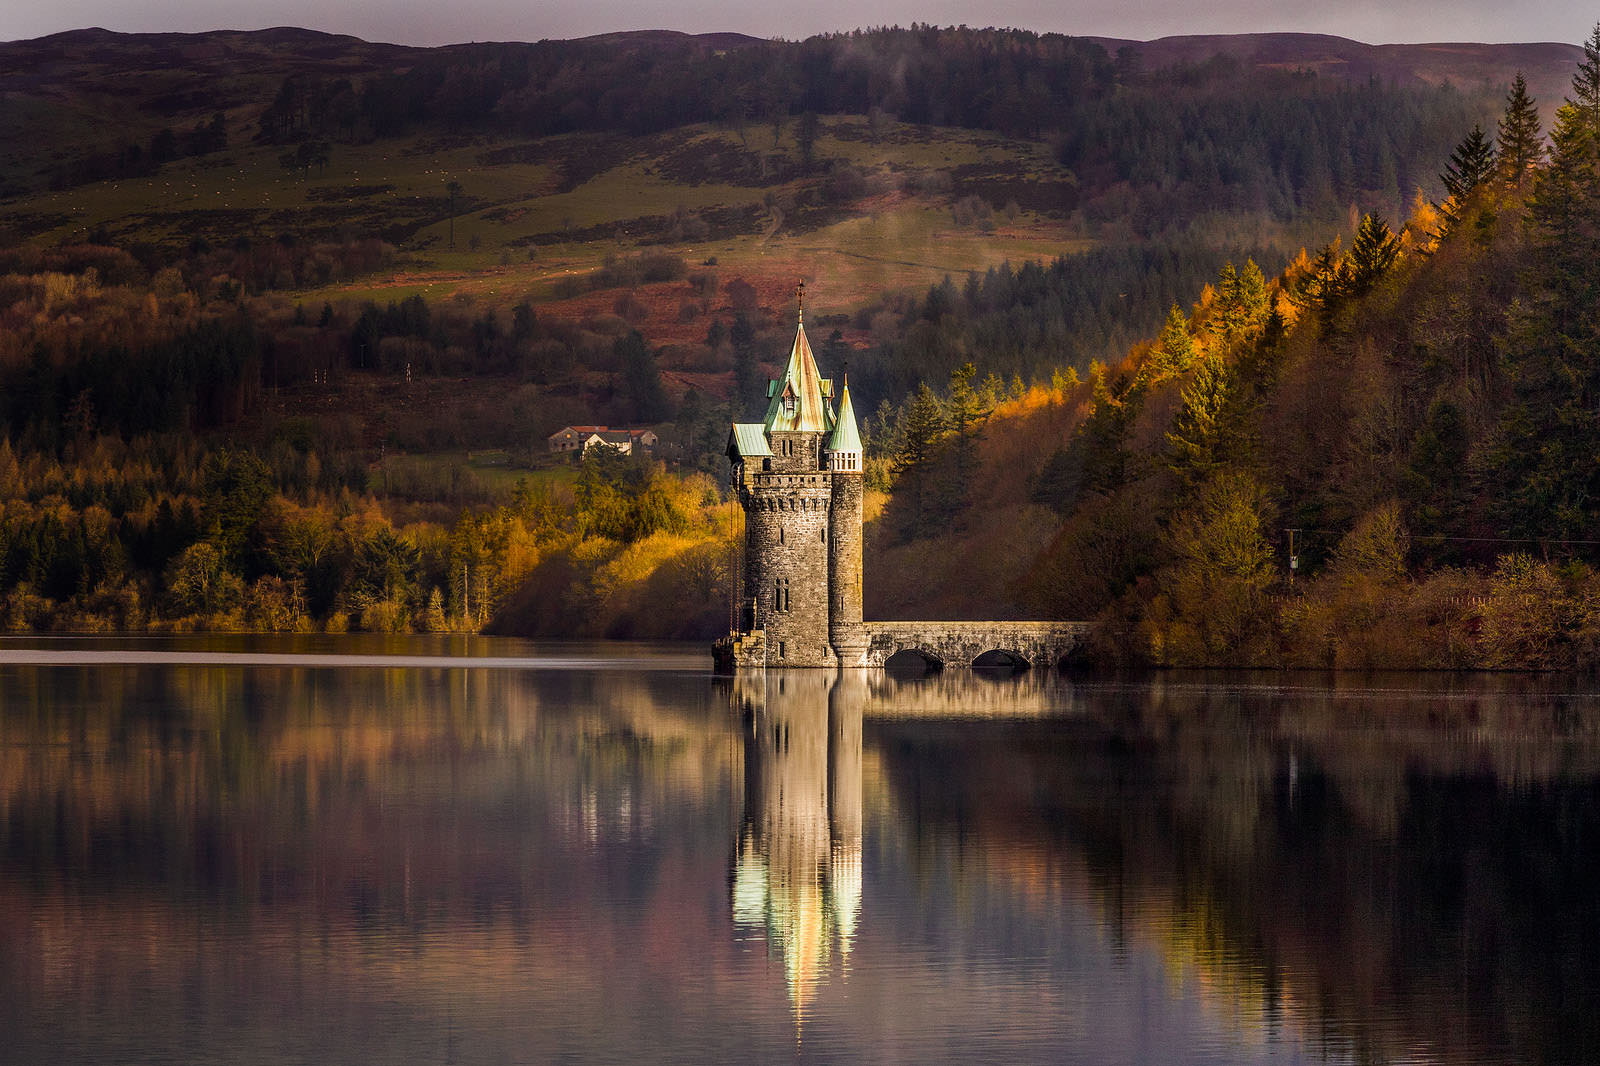 The Princess Tower Lake Vyrnwy